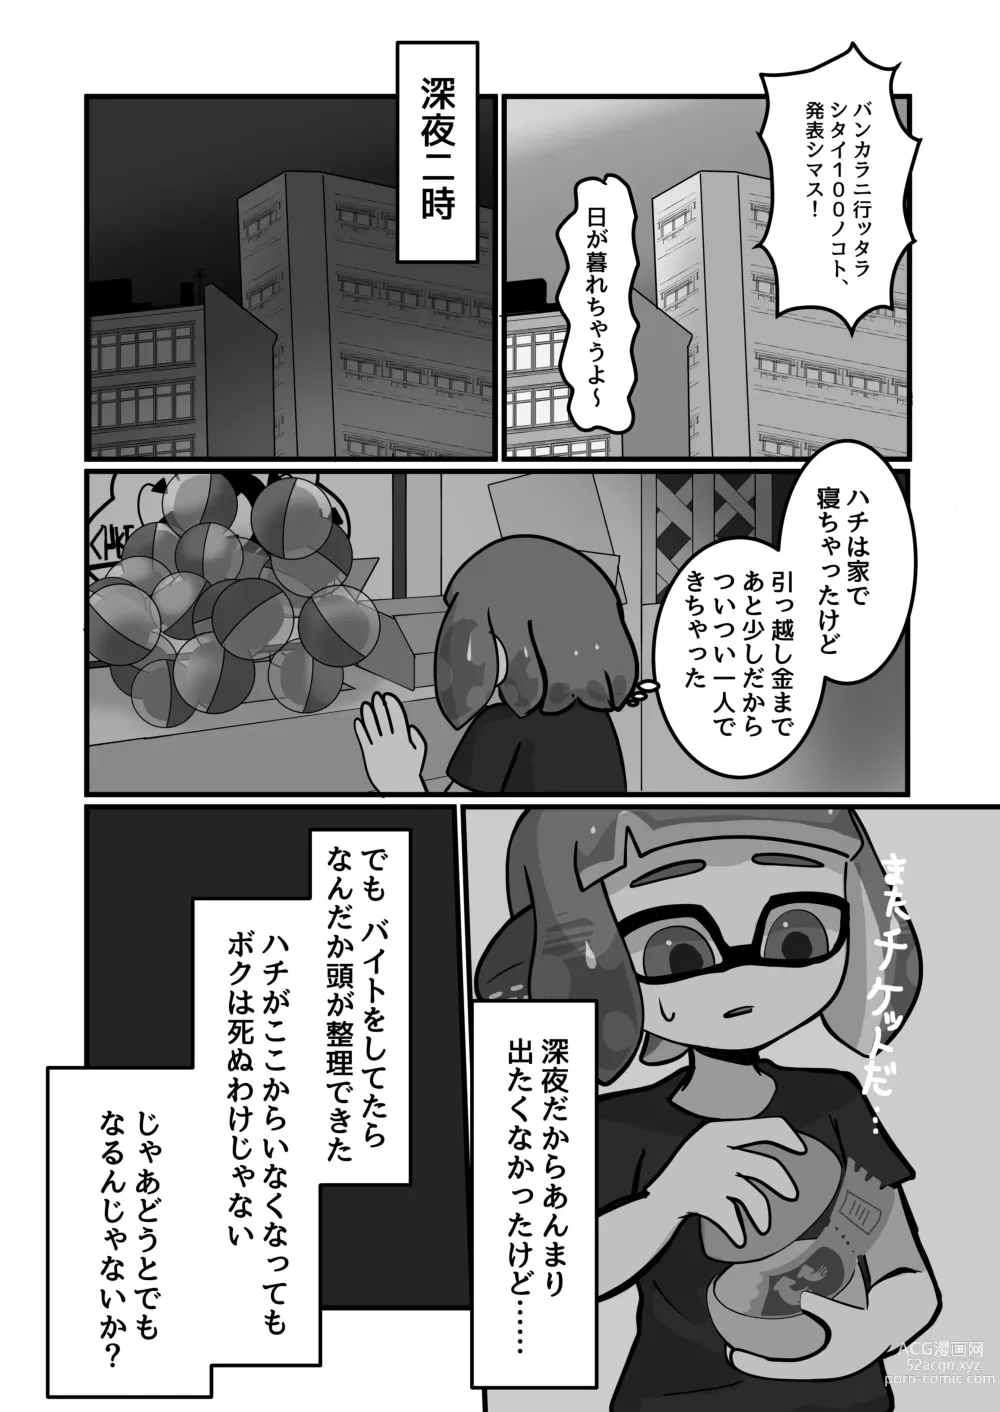 Page 9 of doujinshi Mimacari Hero